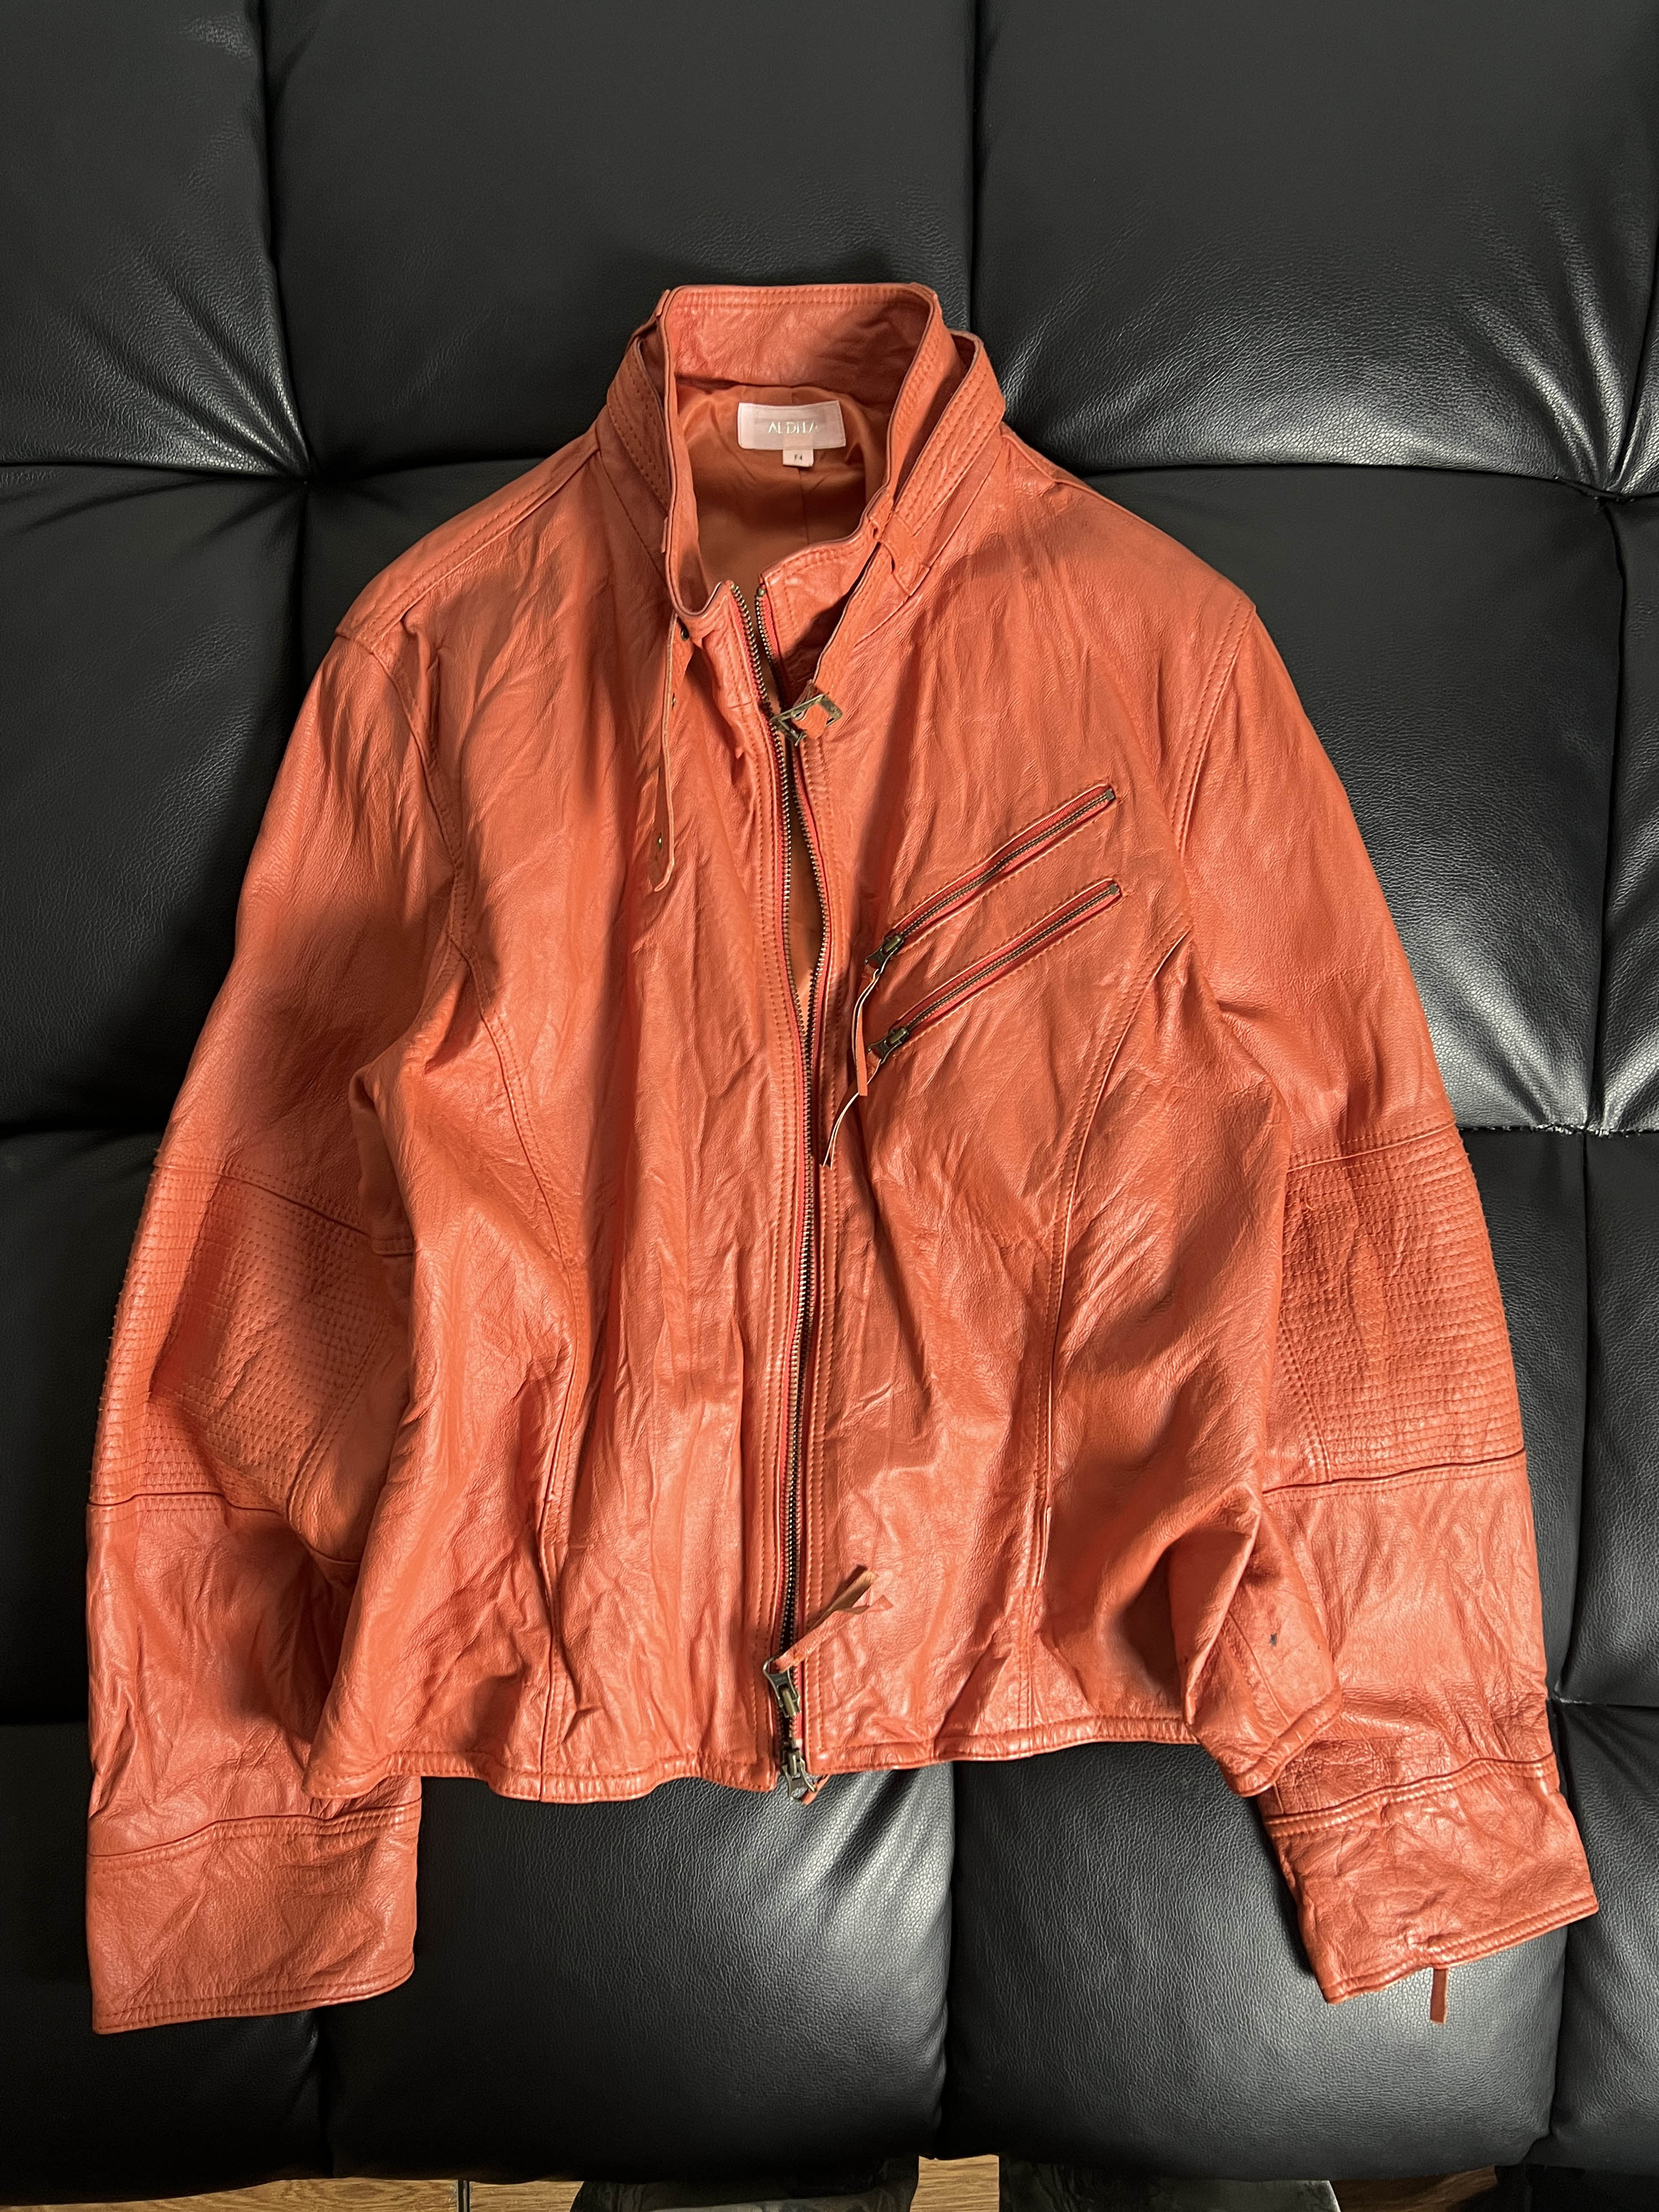 vintage carrot leather jacket